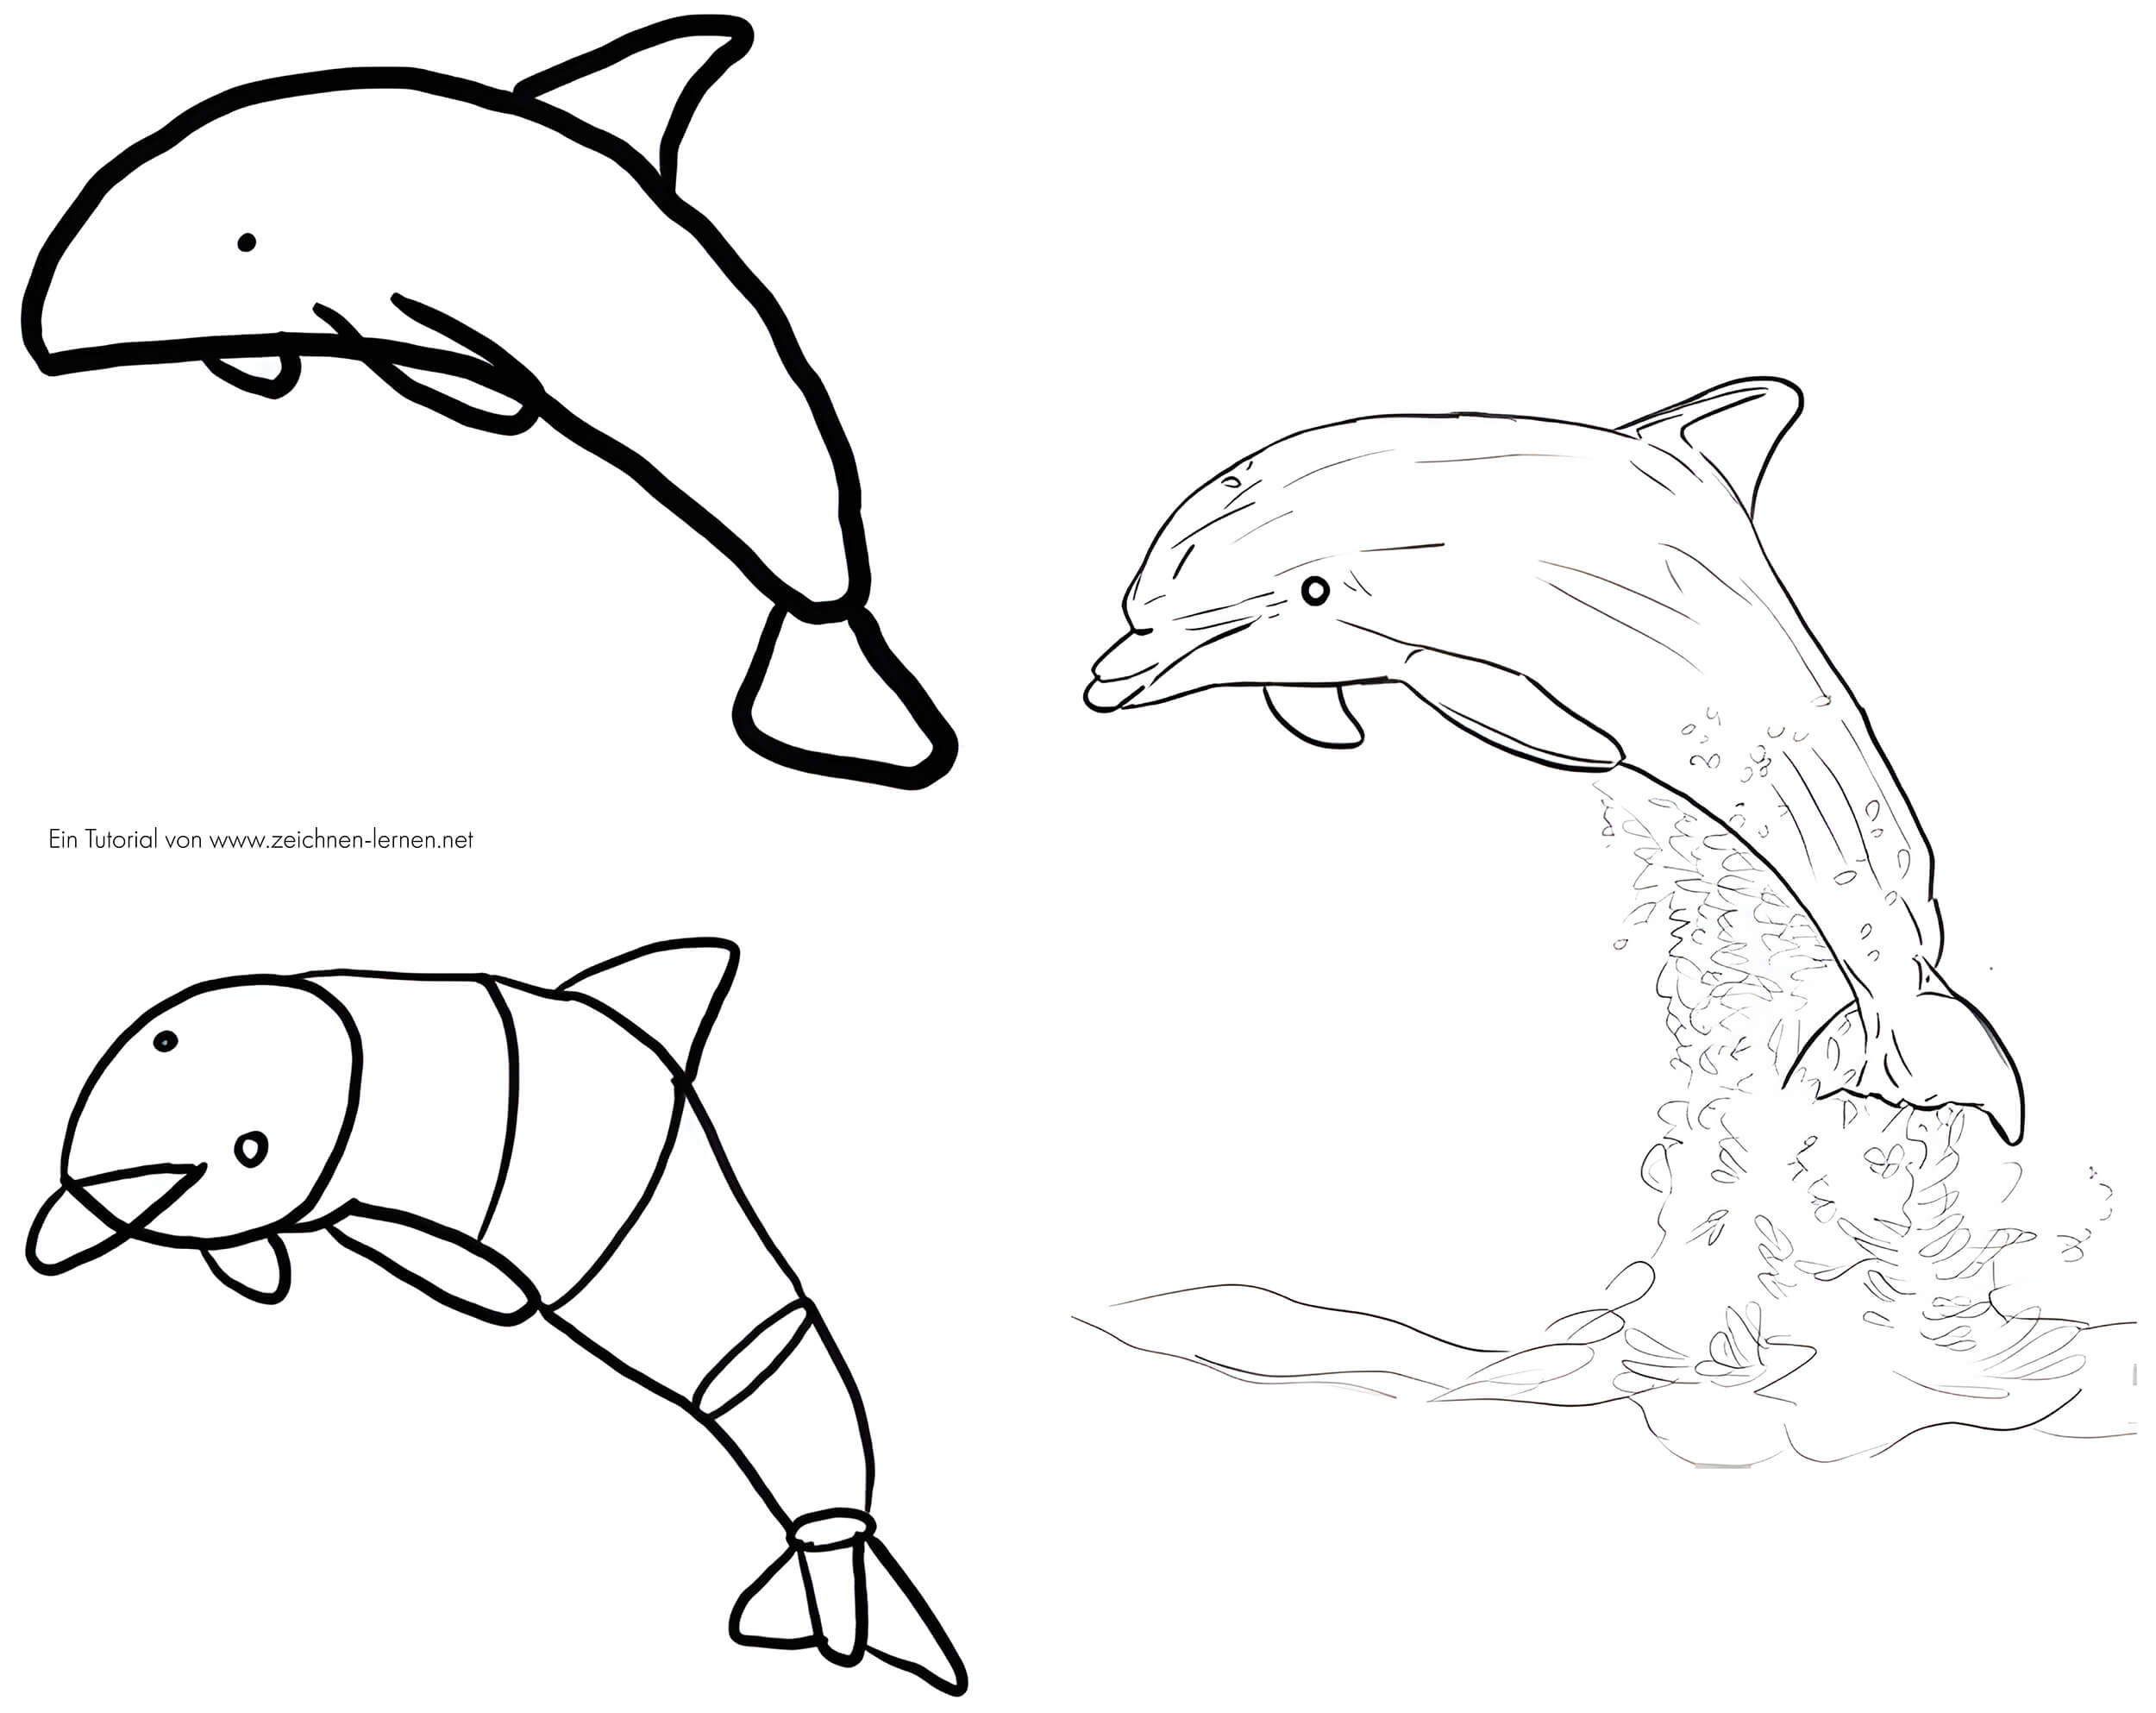 10 Fun Dolphin Crafts For Preschoolers